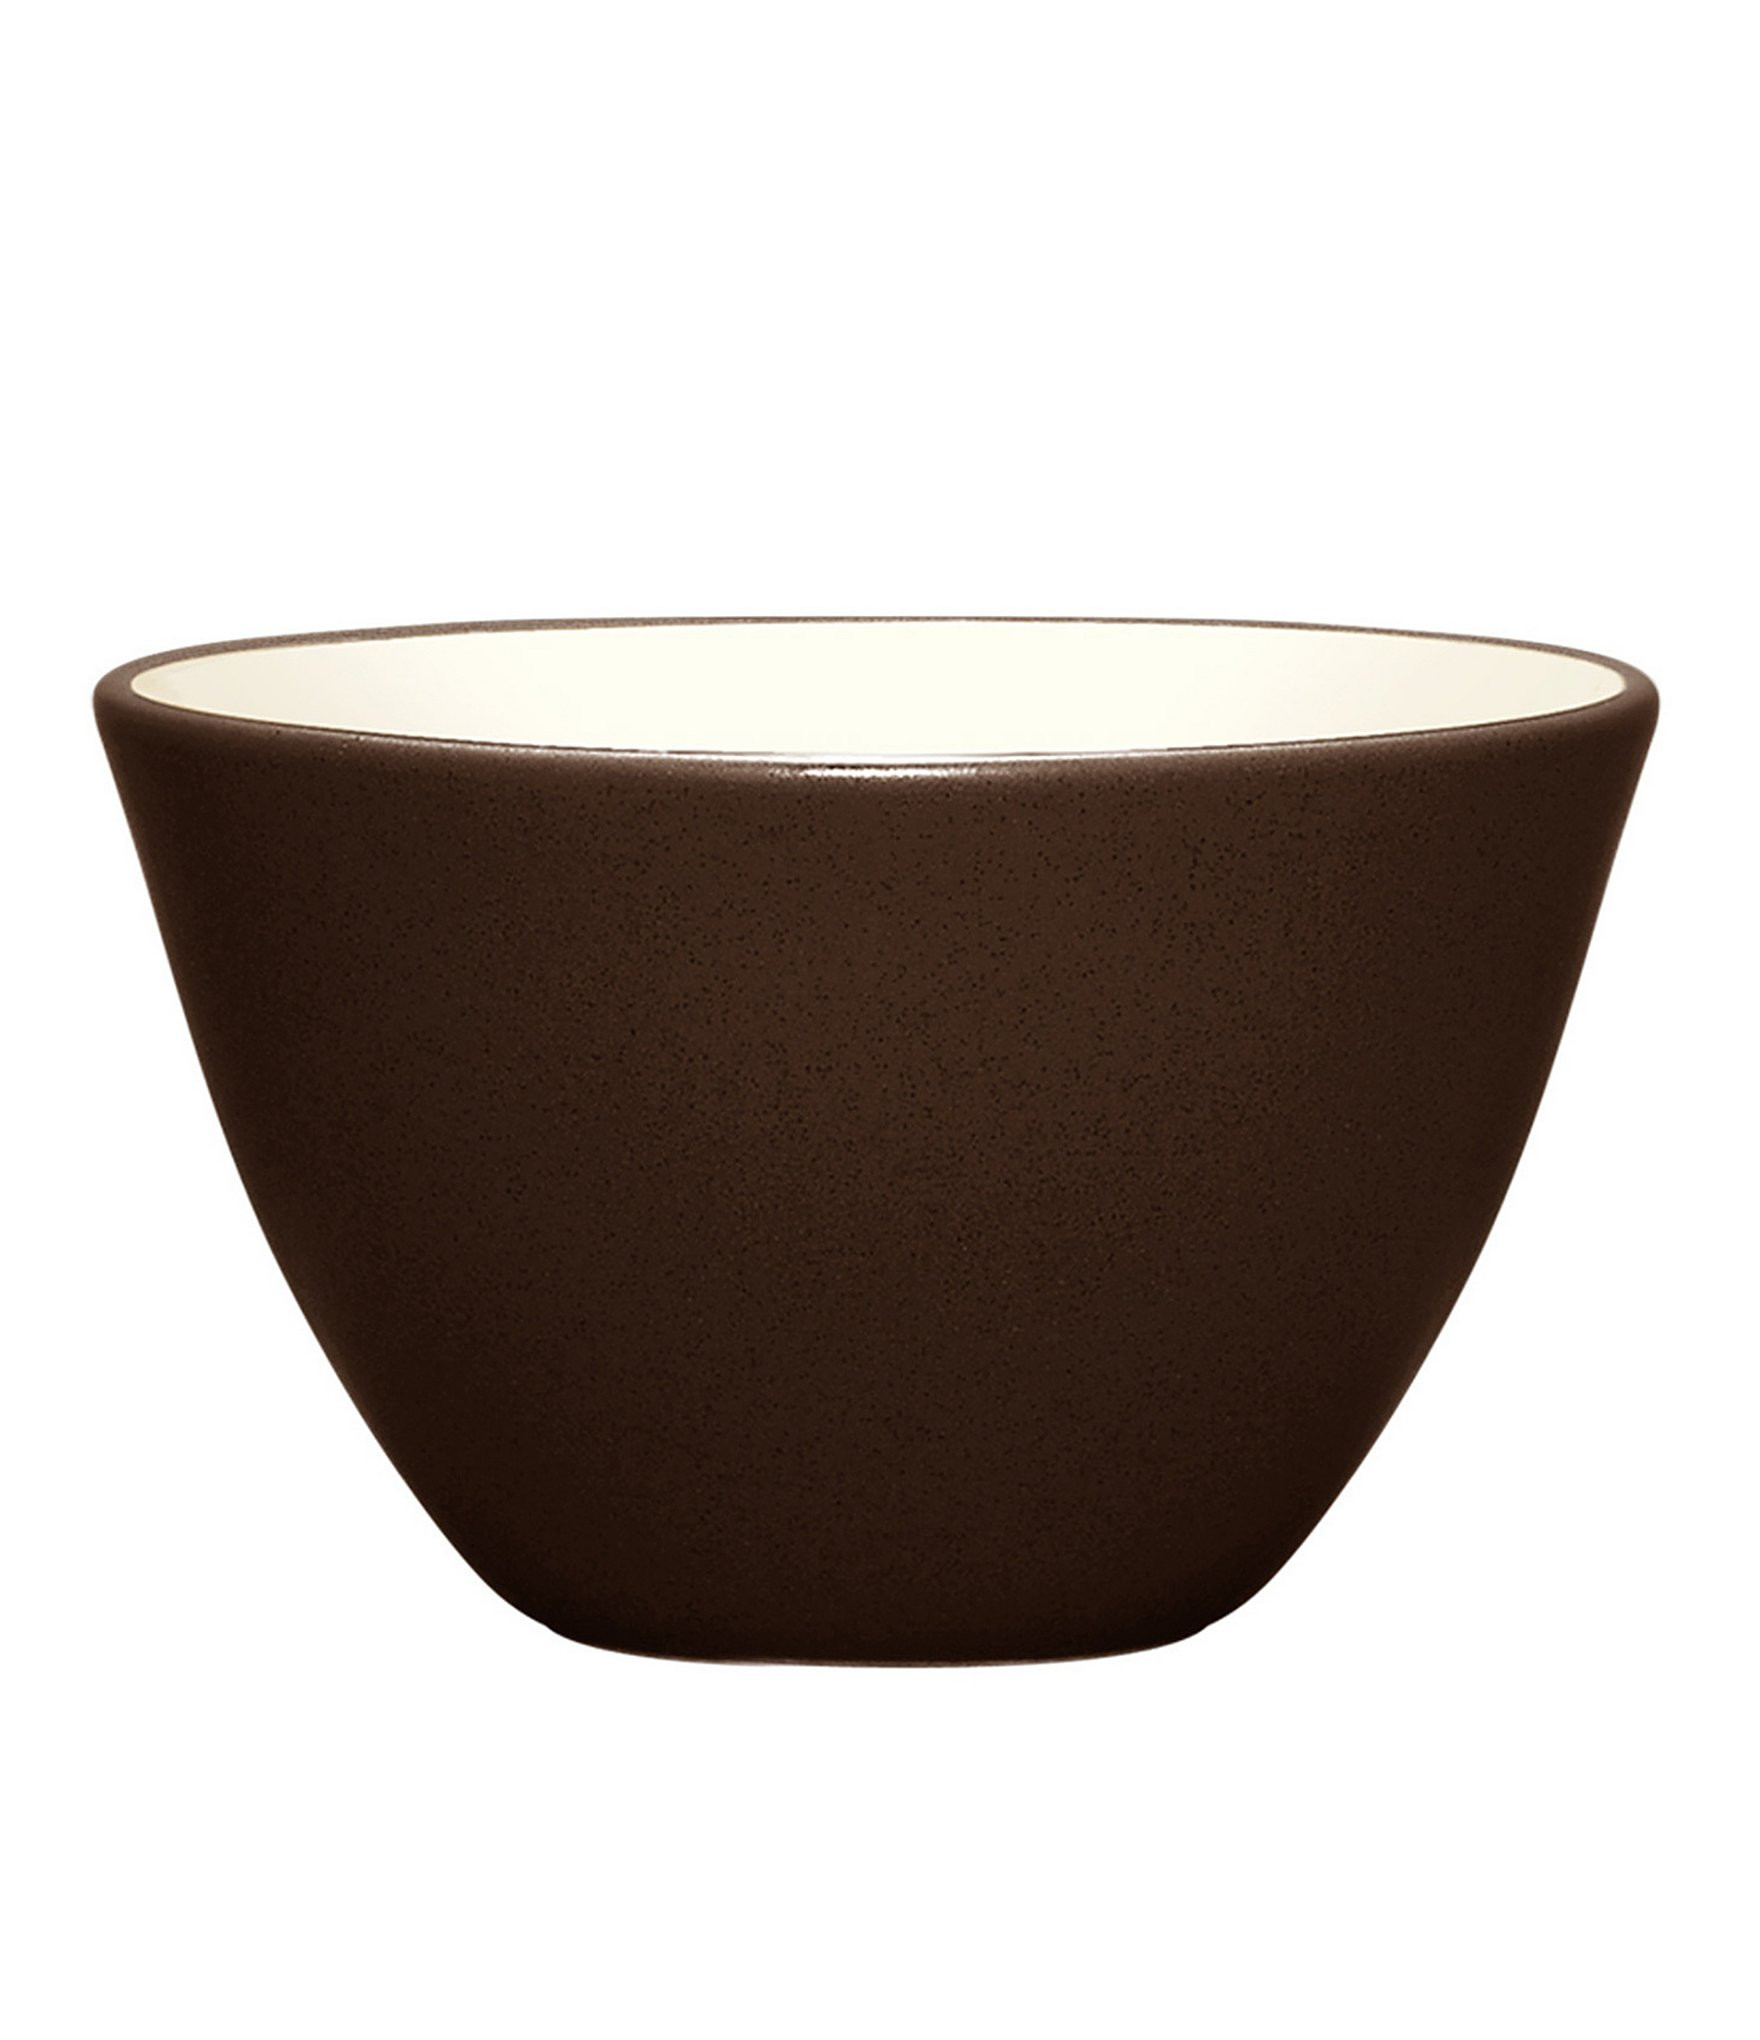 Noritake Crystal Vase Of noritake Casual Everyday Dinnerware Plates Dishes Sets Dillards with Regard to 05417509 Zi Mini Bowl